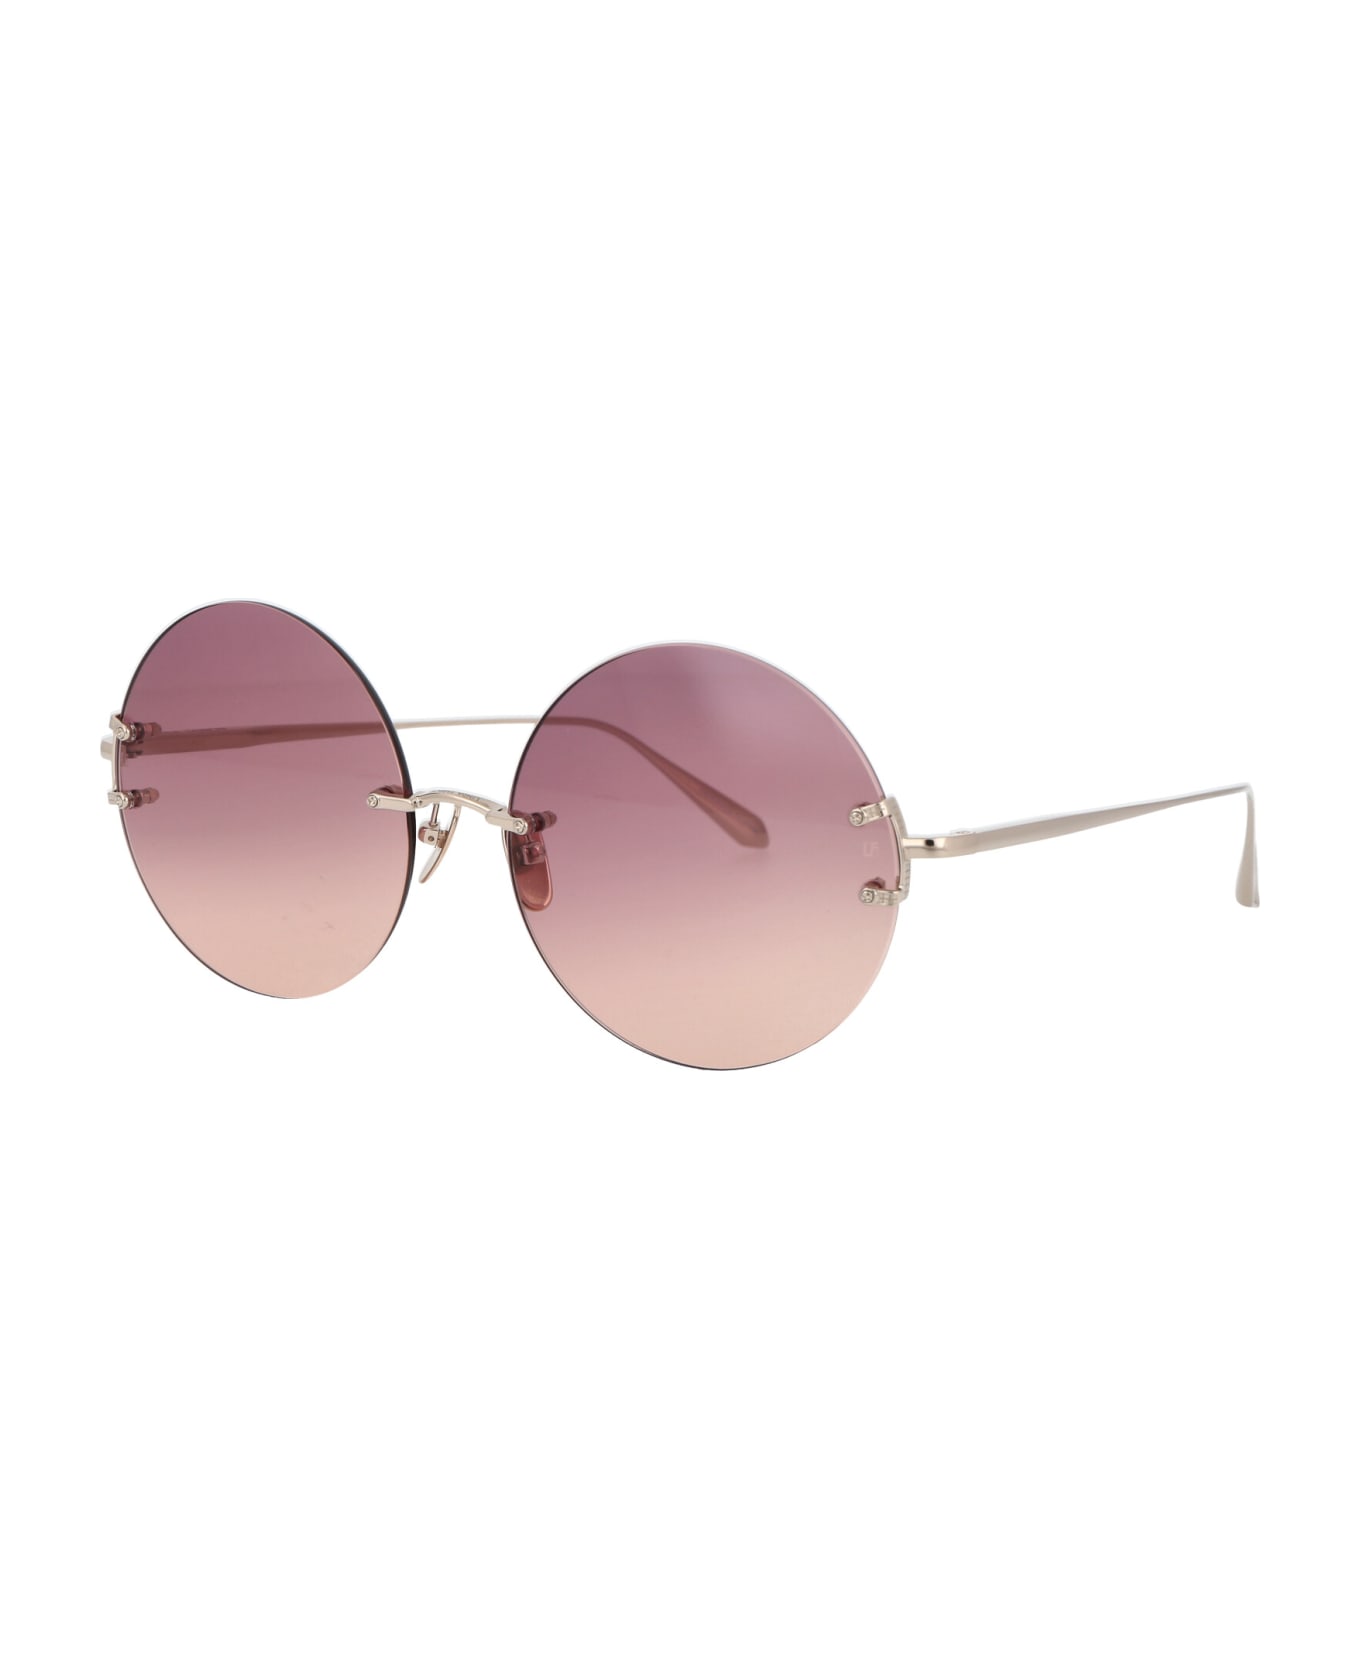 Linda Farrow Lotus Sunglasses - LIGHTGOLD/WINEGRAD サングラス